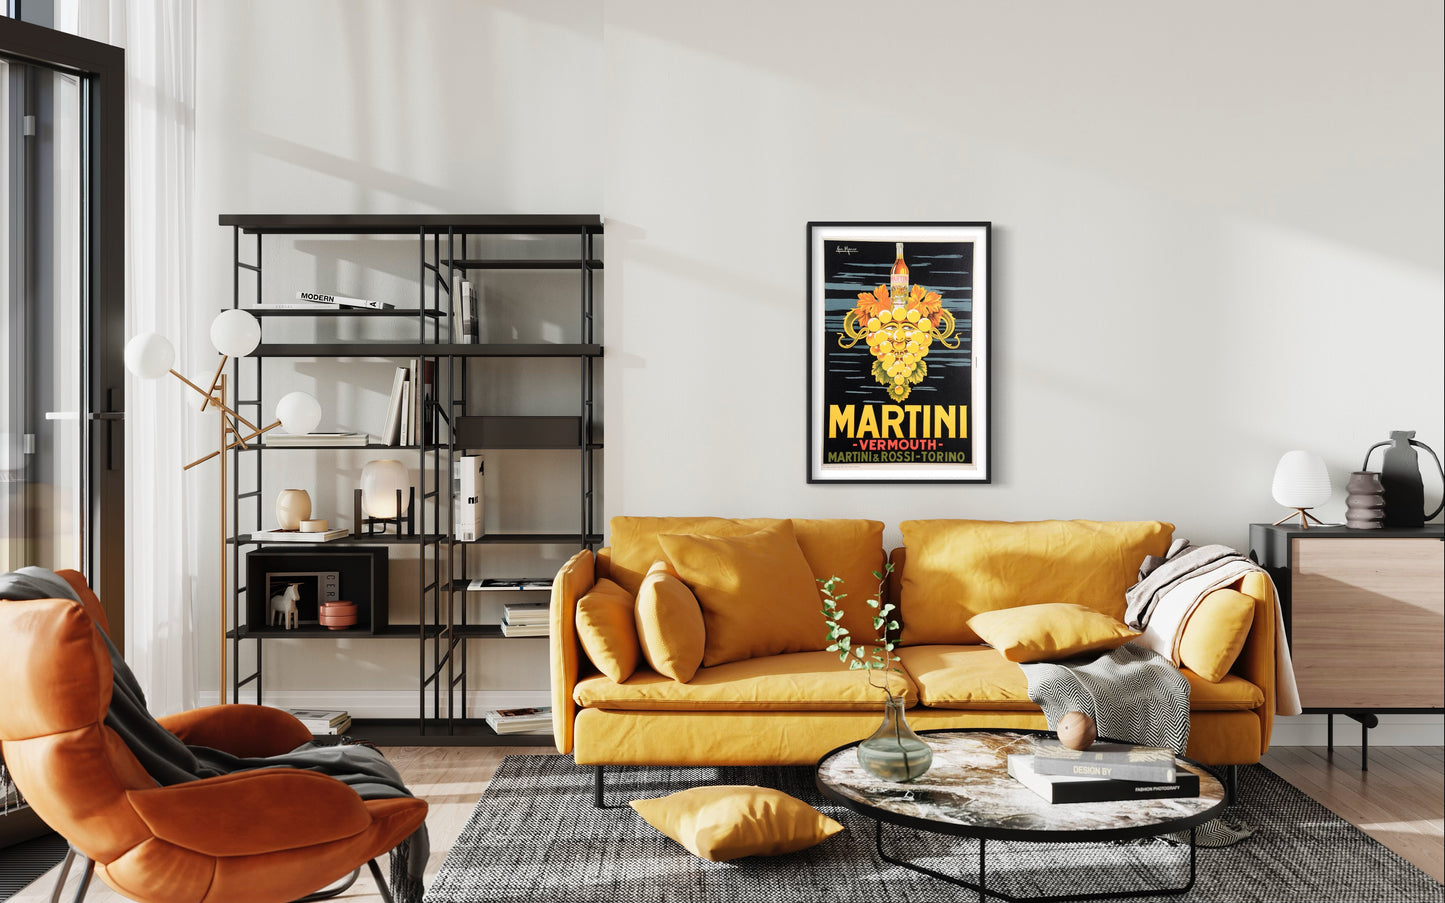 Vintage Italian Poster Advertising Martini Vermouth